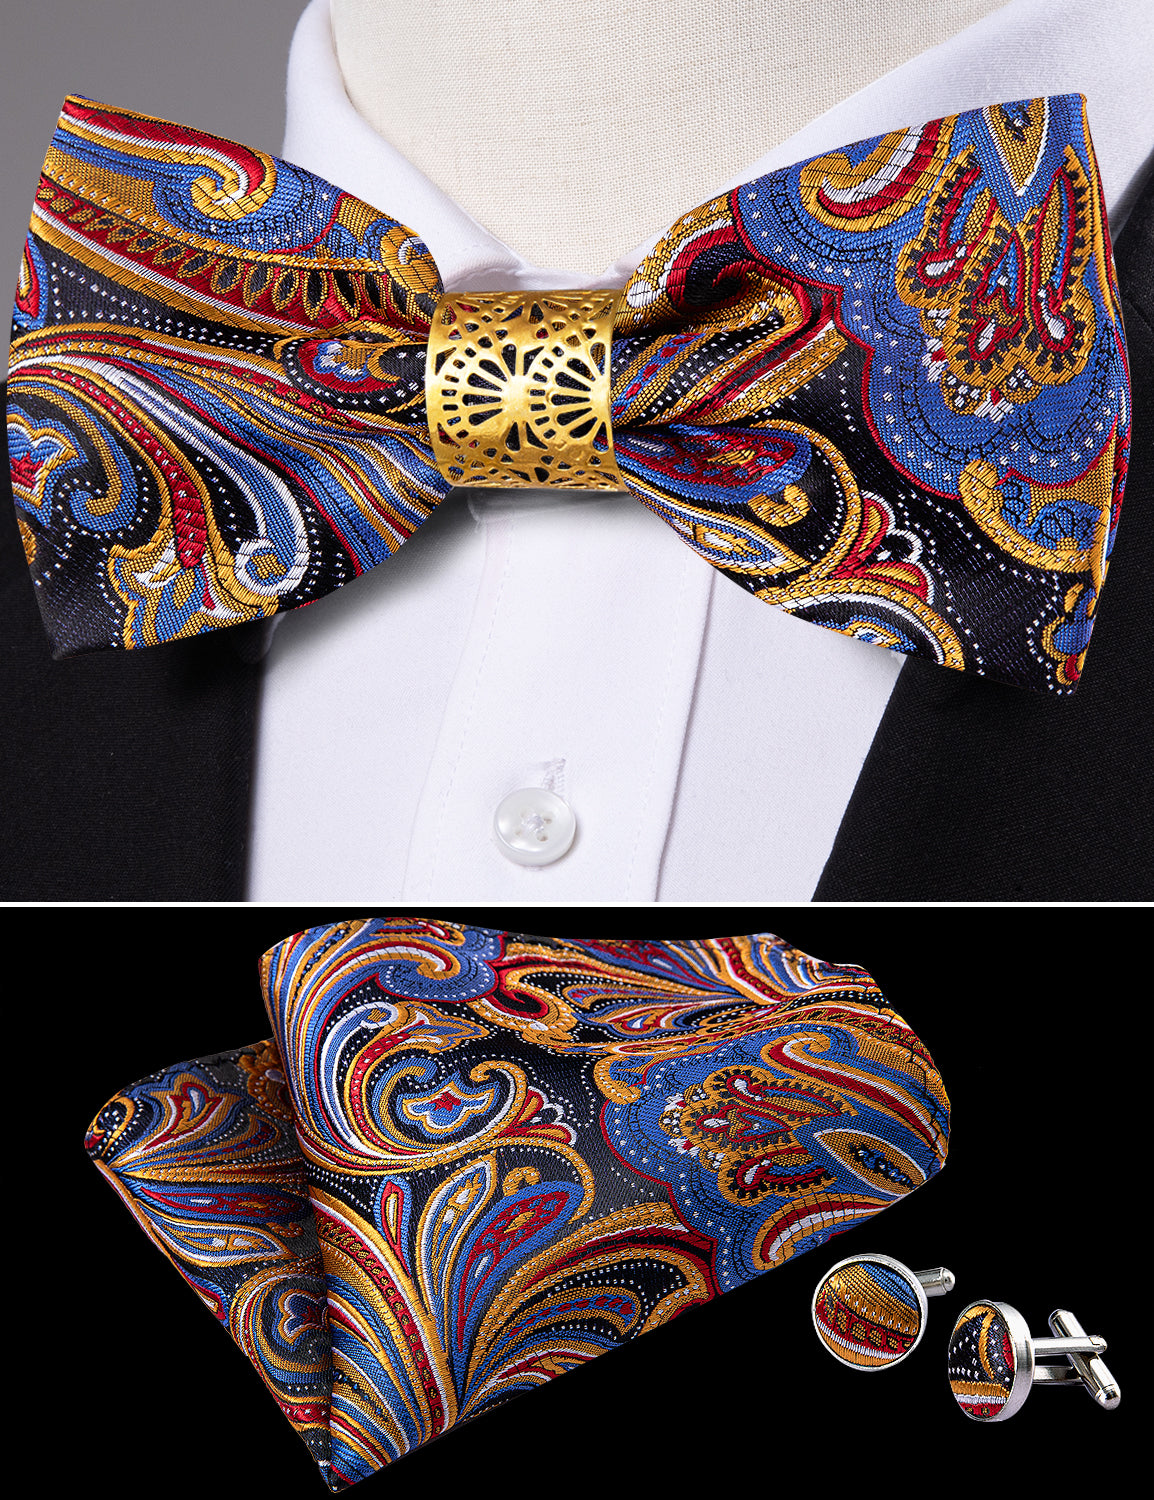 Colorful Pre-tied Bow Tie Hanky Cufflinks Set